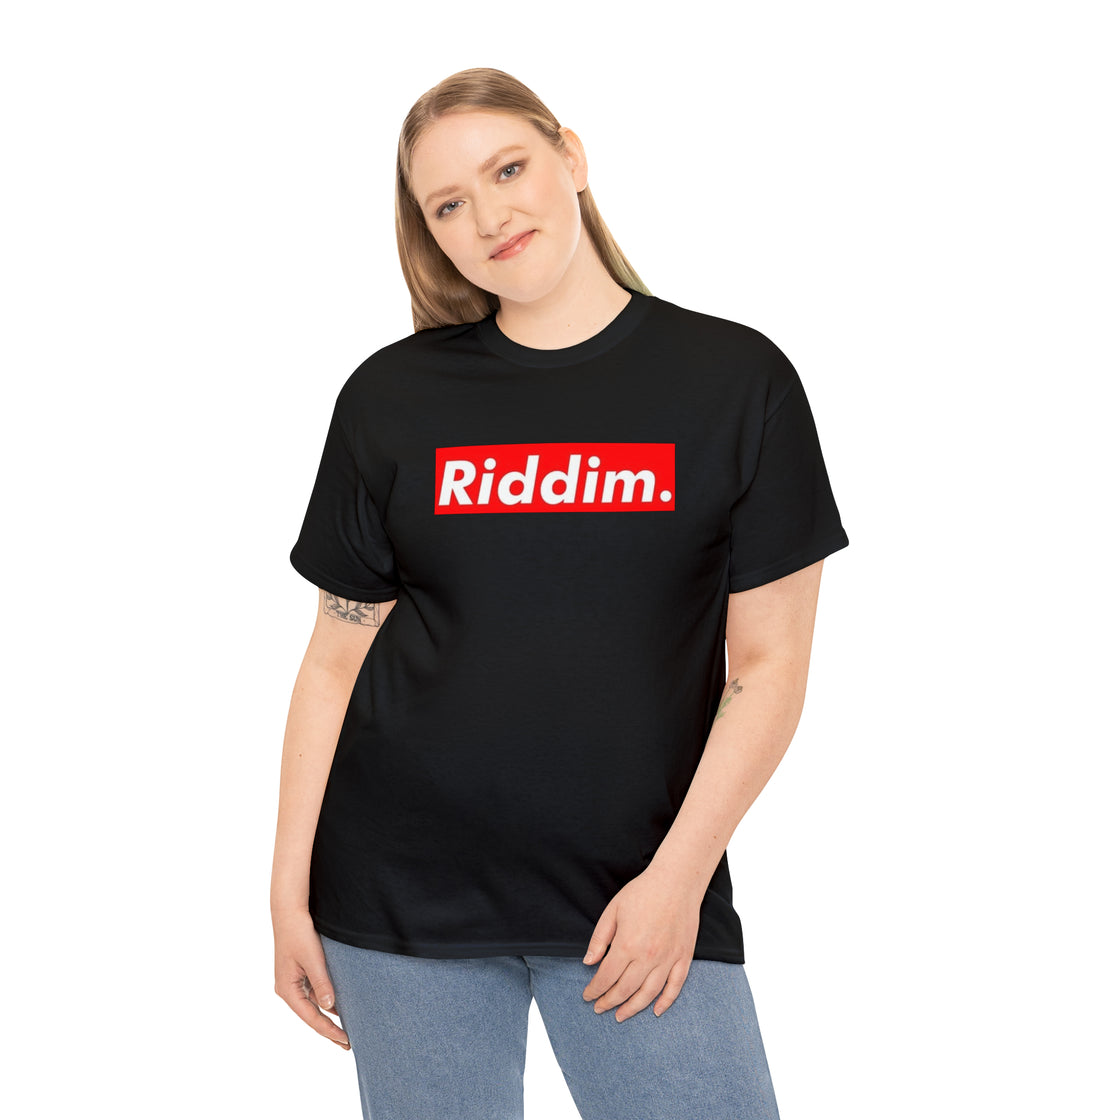 Riddim T Shirt